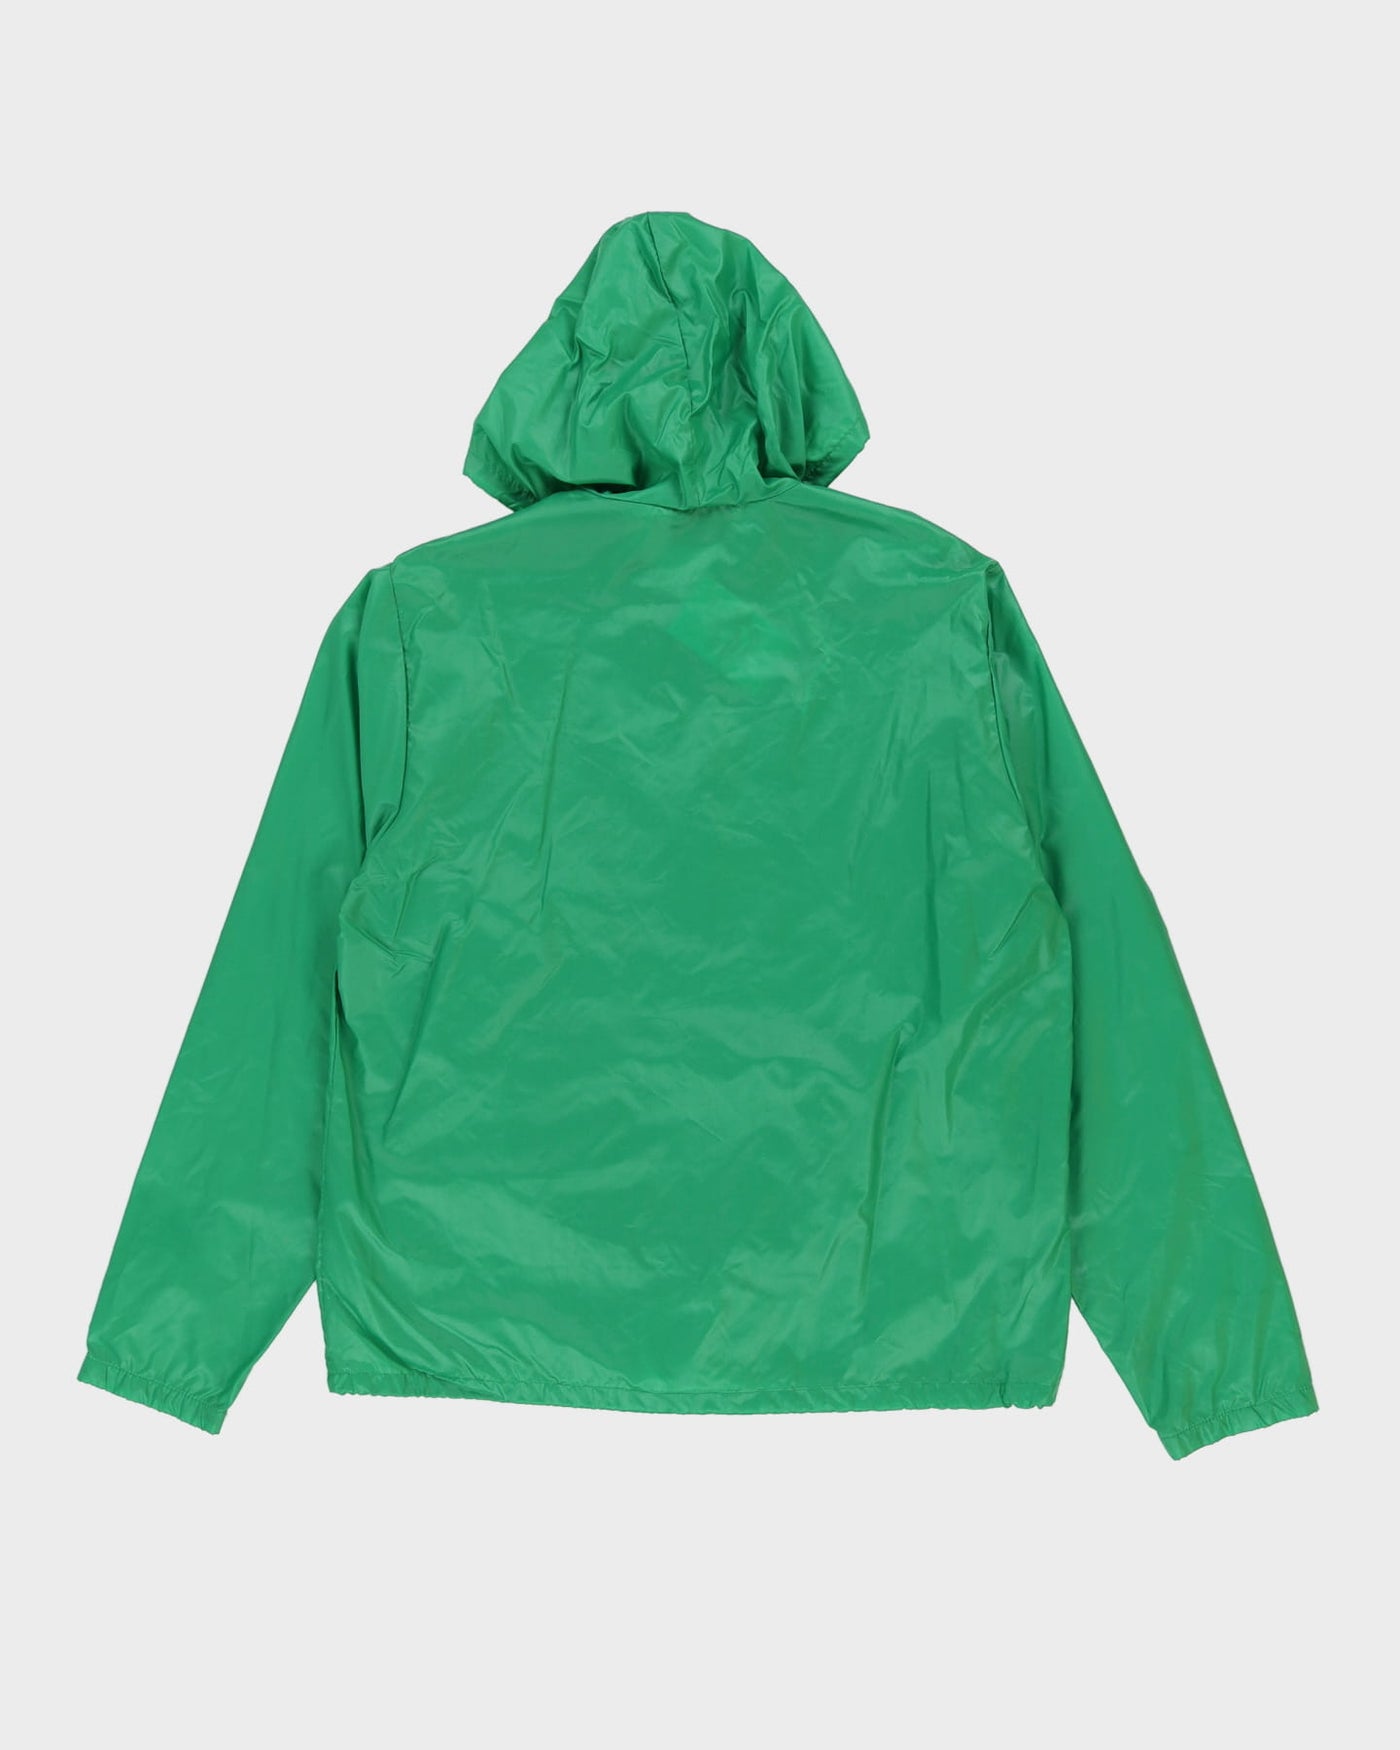 Vintage 90s IZOD Lacoste Green Hooded Anorak Jacket - L